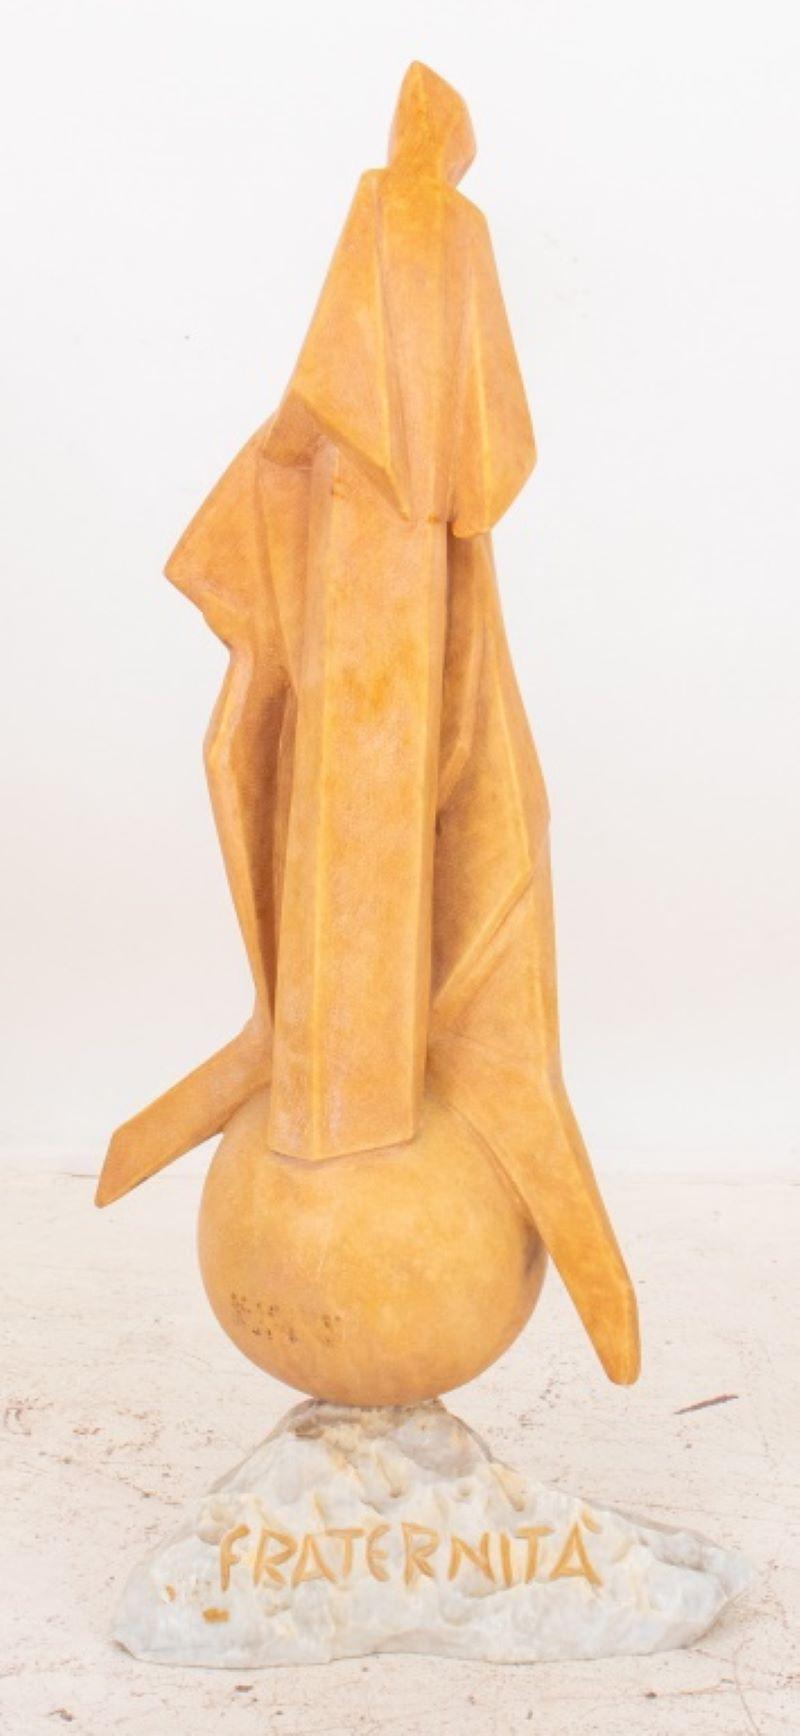 Pieta Carita Fraternita Marble Sculpture For Sale 1